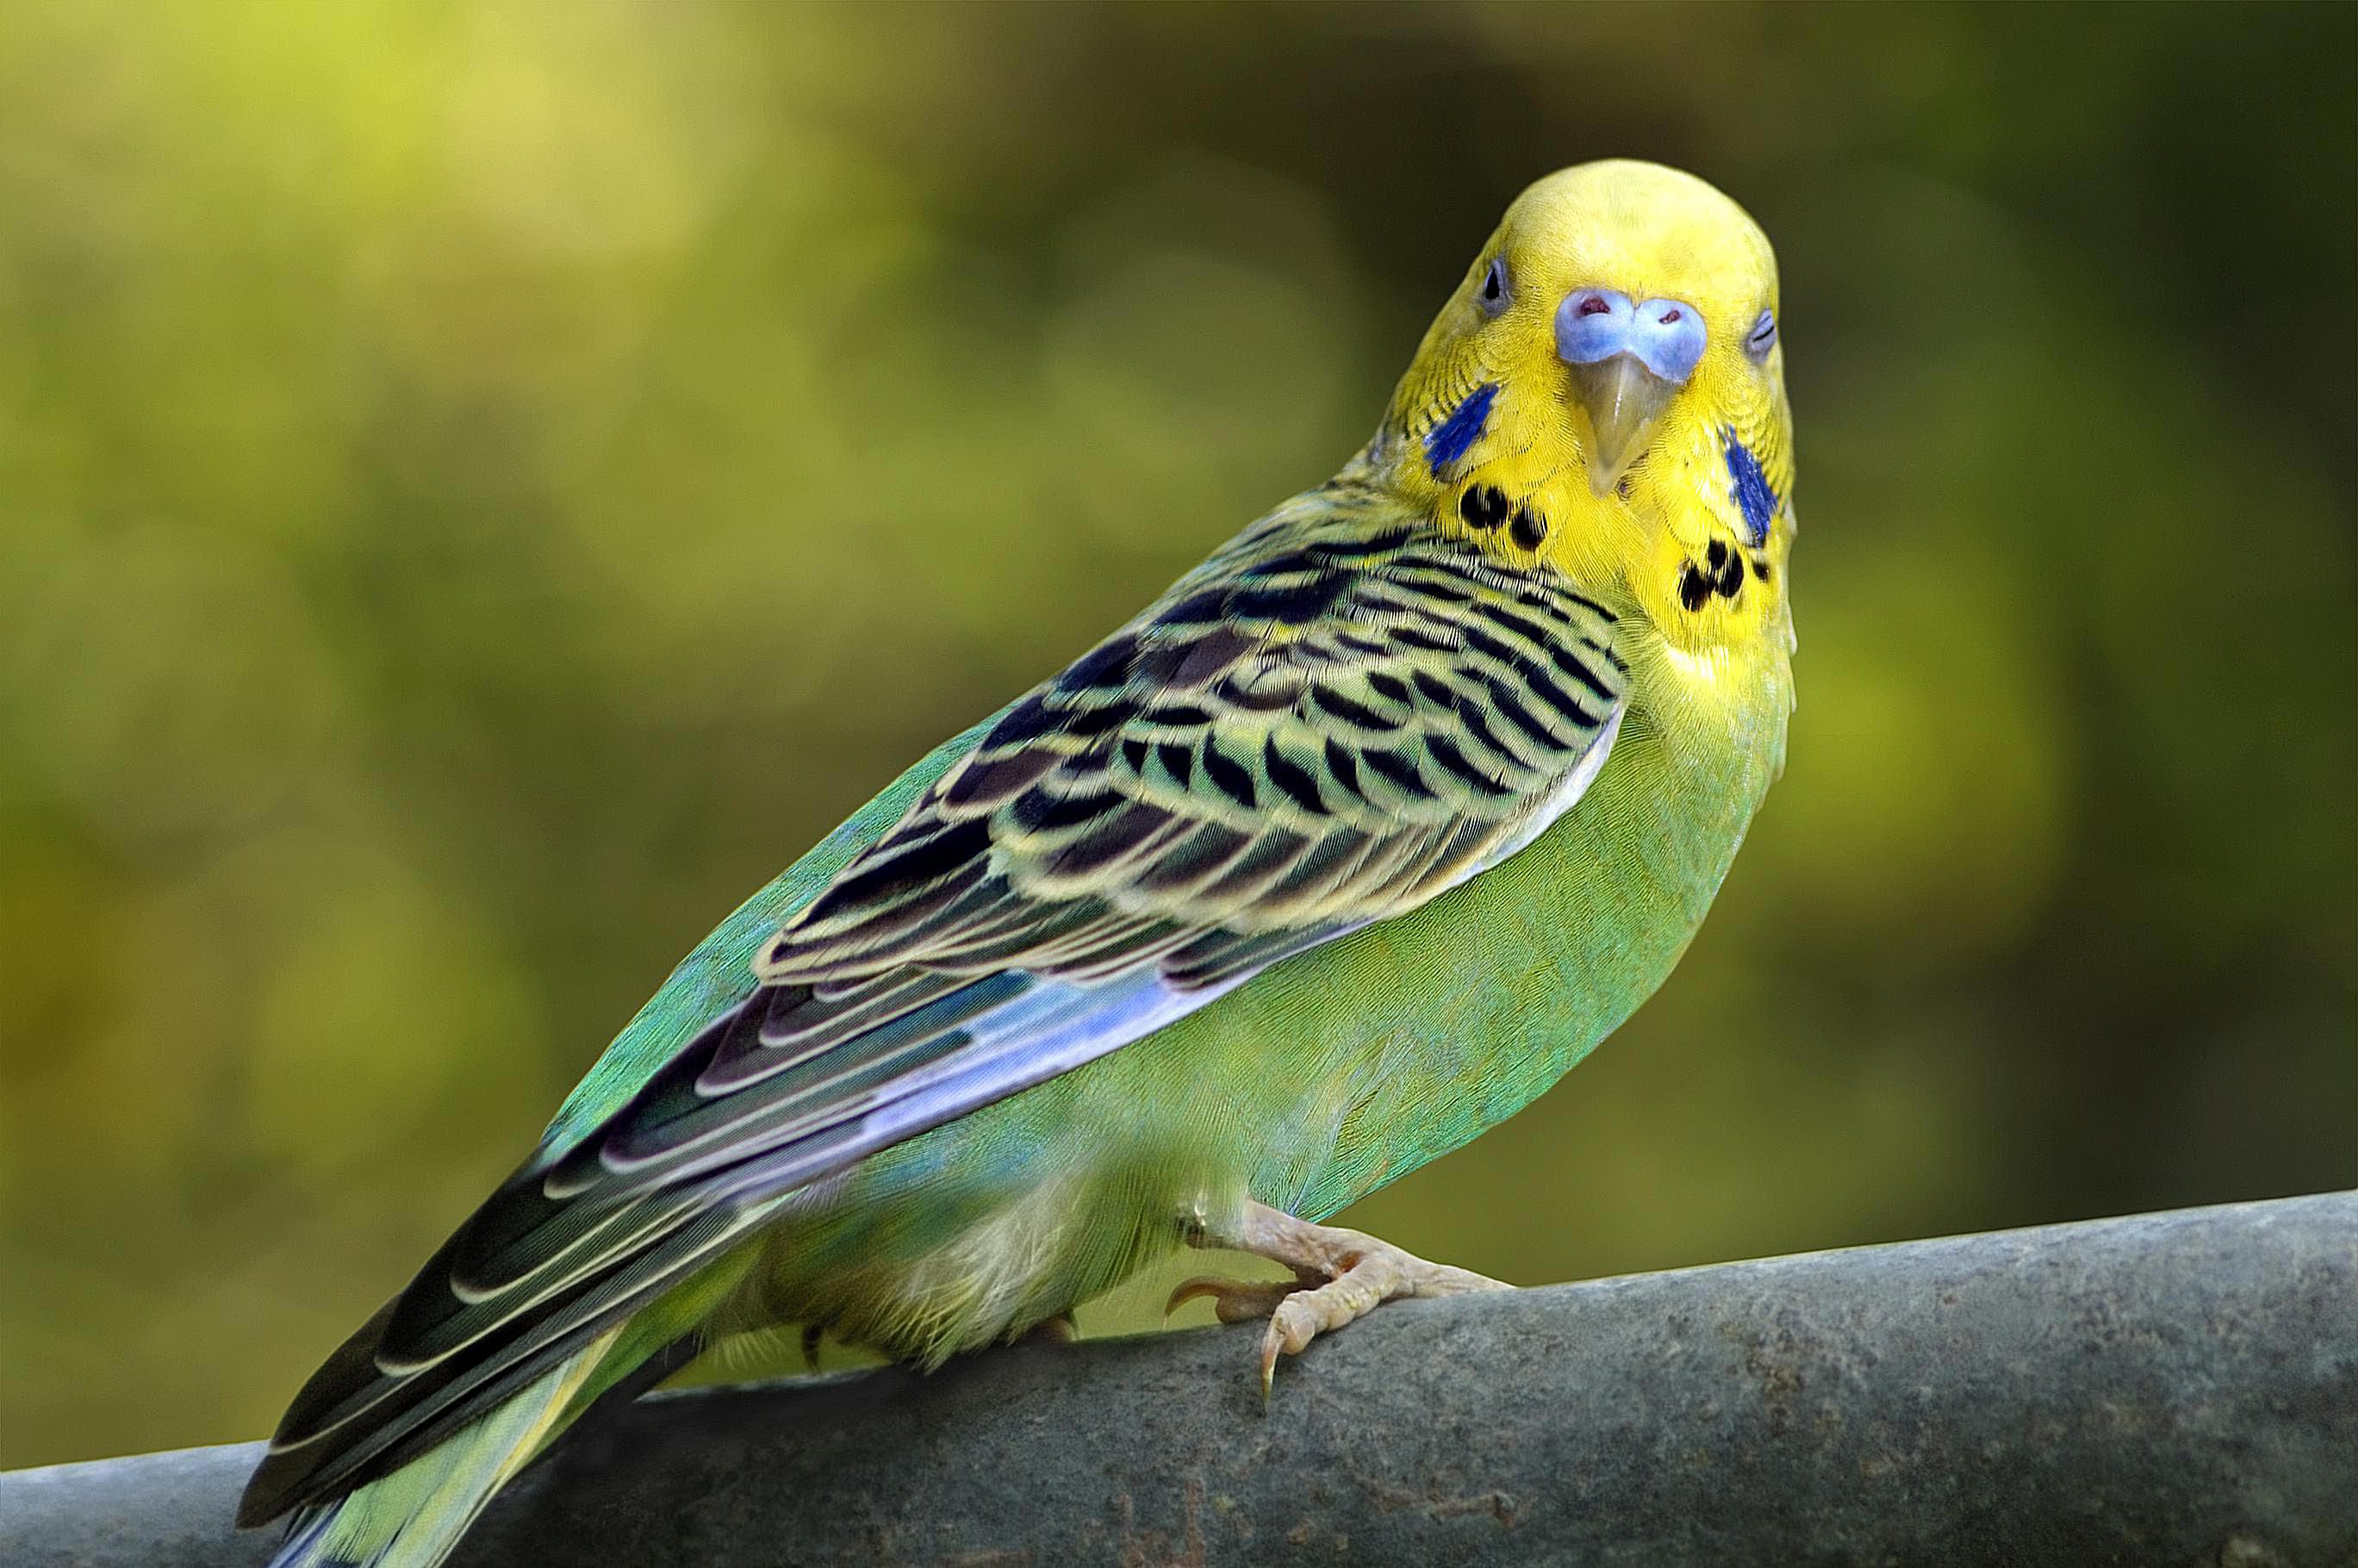 A parakeet sitting on a log